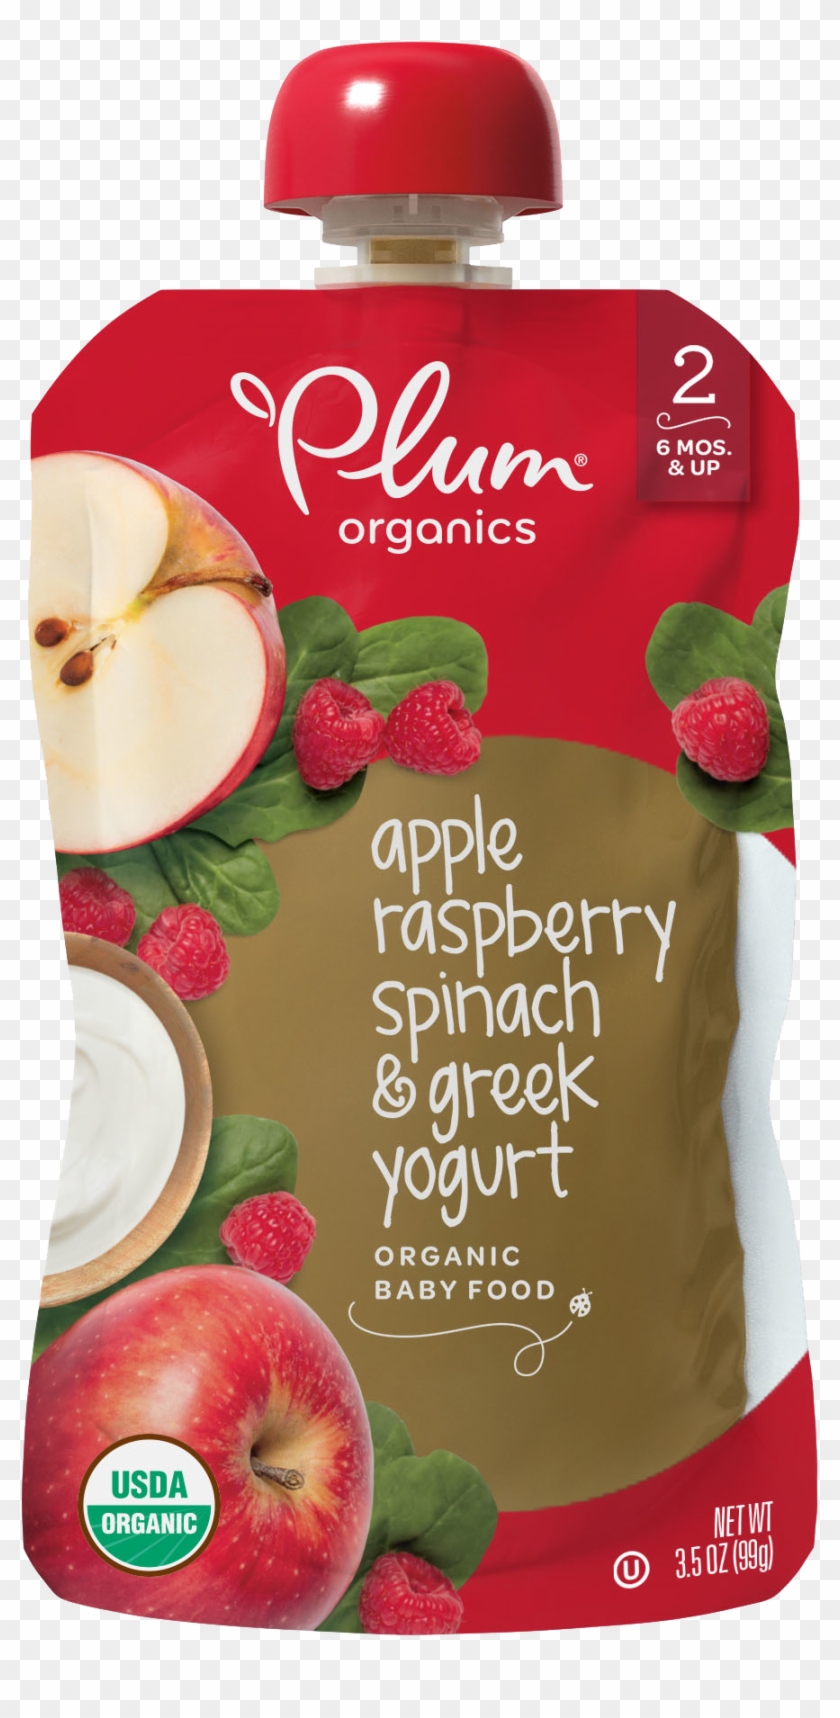 Apple, Raspberry, Spinach & Greek Yogurt - Plum Organics Clipart #2360298